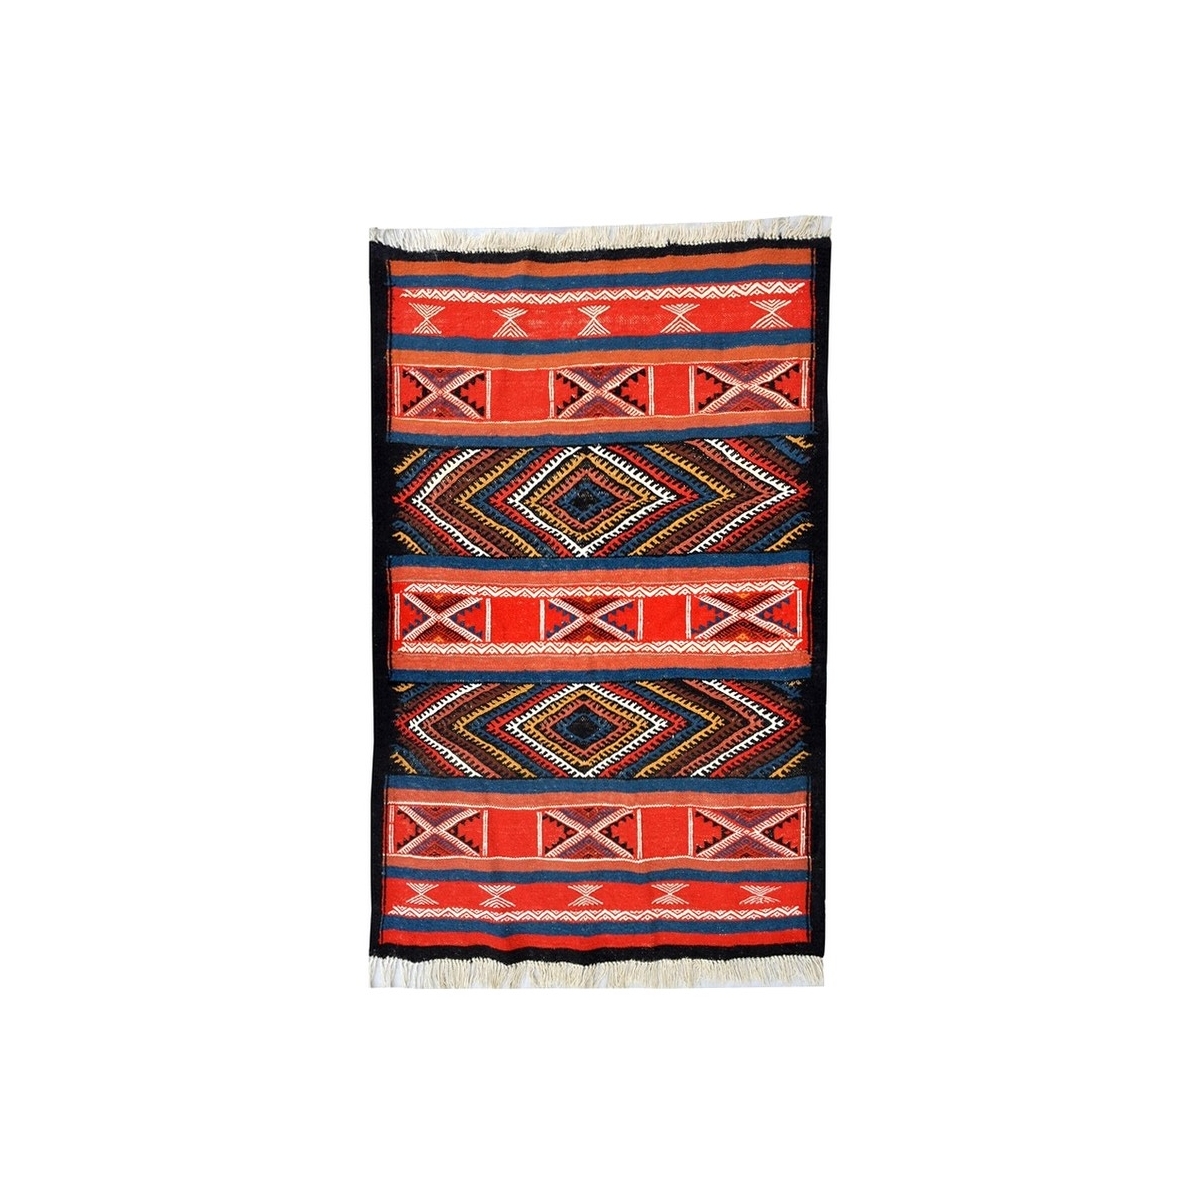 Tapete berbere Tapete Kilim Akil 77x105 Multicor (Tecidos à mão, Lã) Tapete tunisiano kilim, estilo marroquino. Tapete retangula